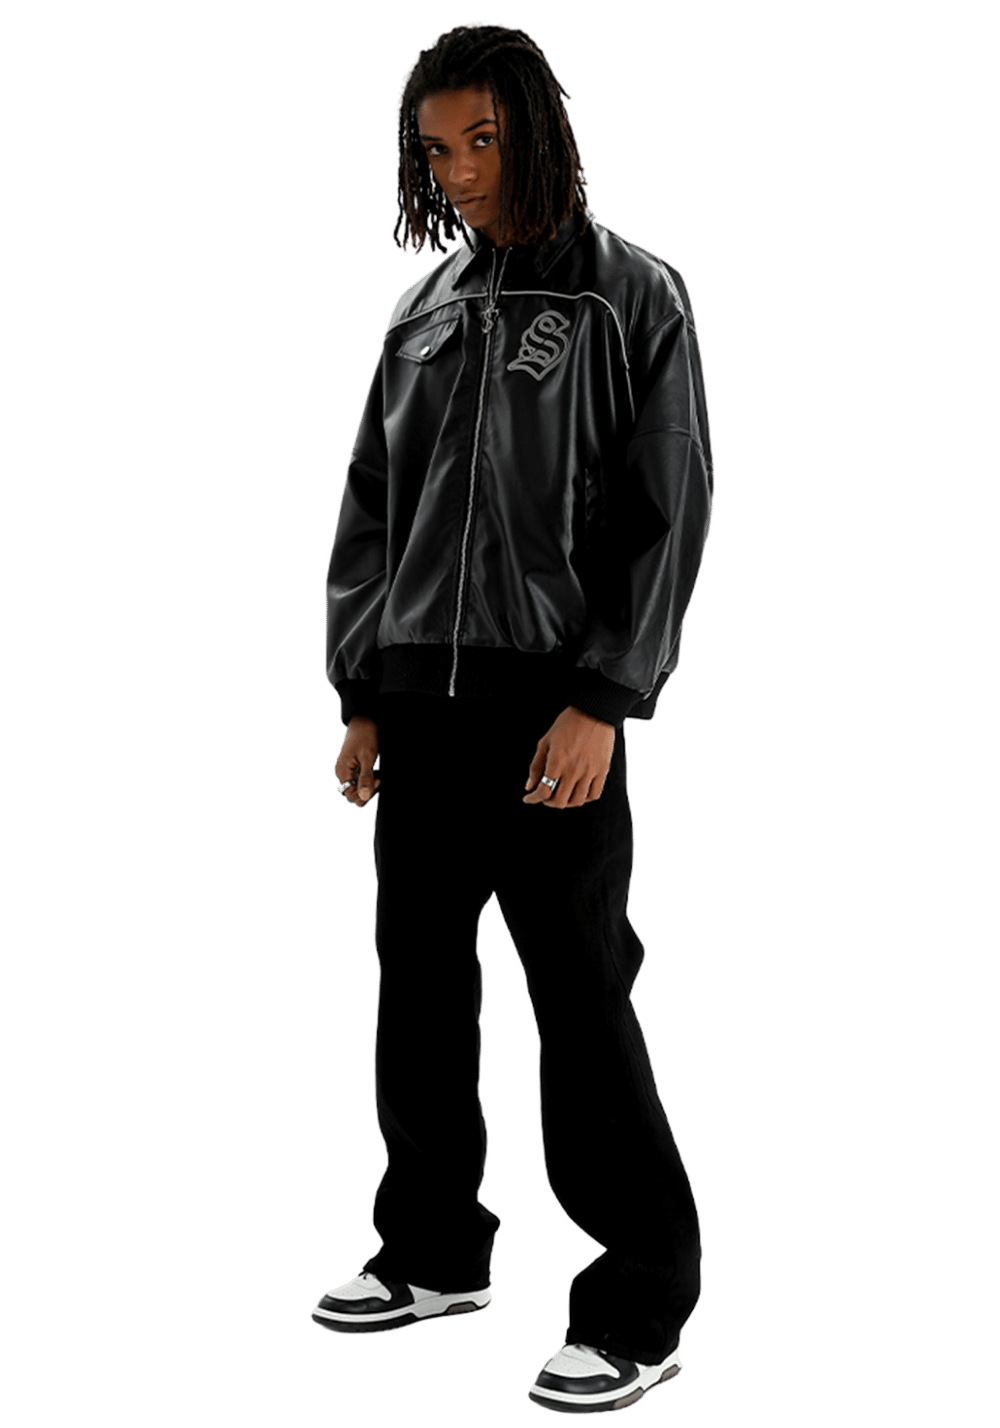 NESA Embroidered Faux Leather Jacket - PSYLOS 1, NESA Embroidered Faux Leather Jacket, Jacket, Small Town Kid, PSYLOS 1